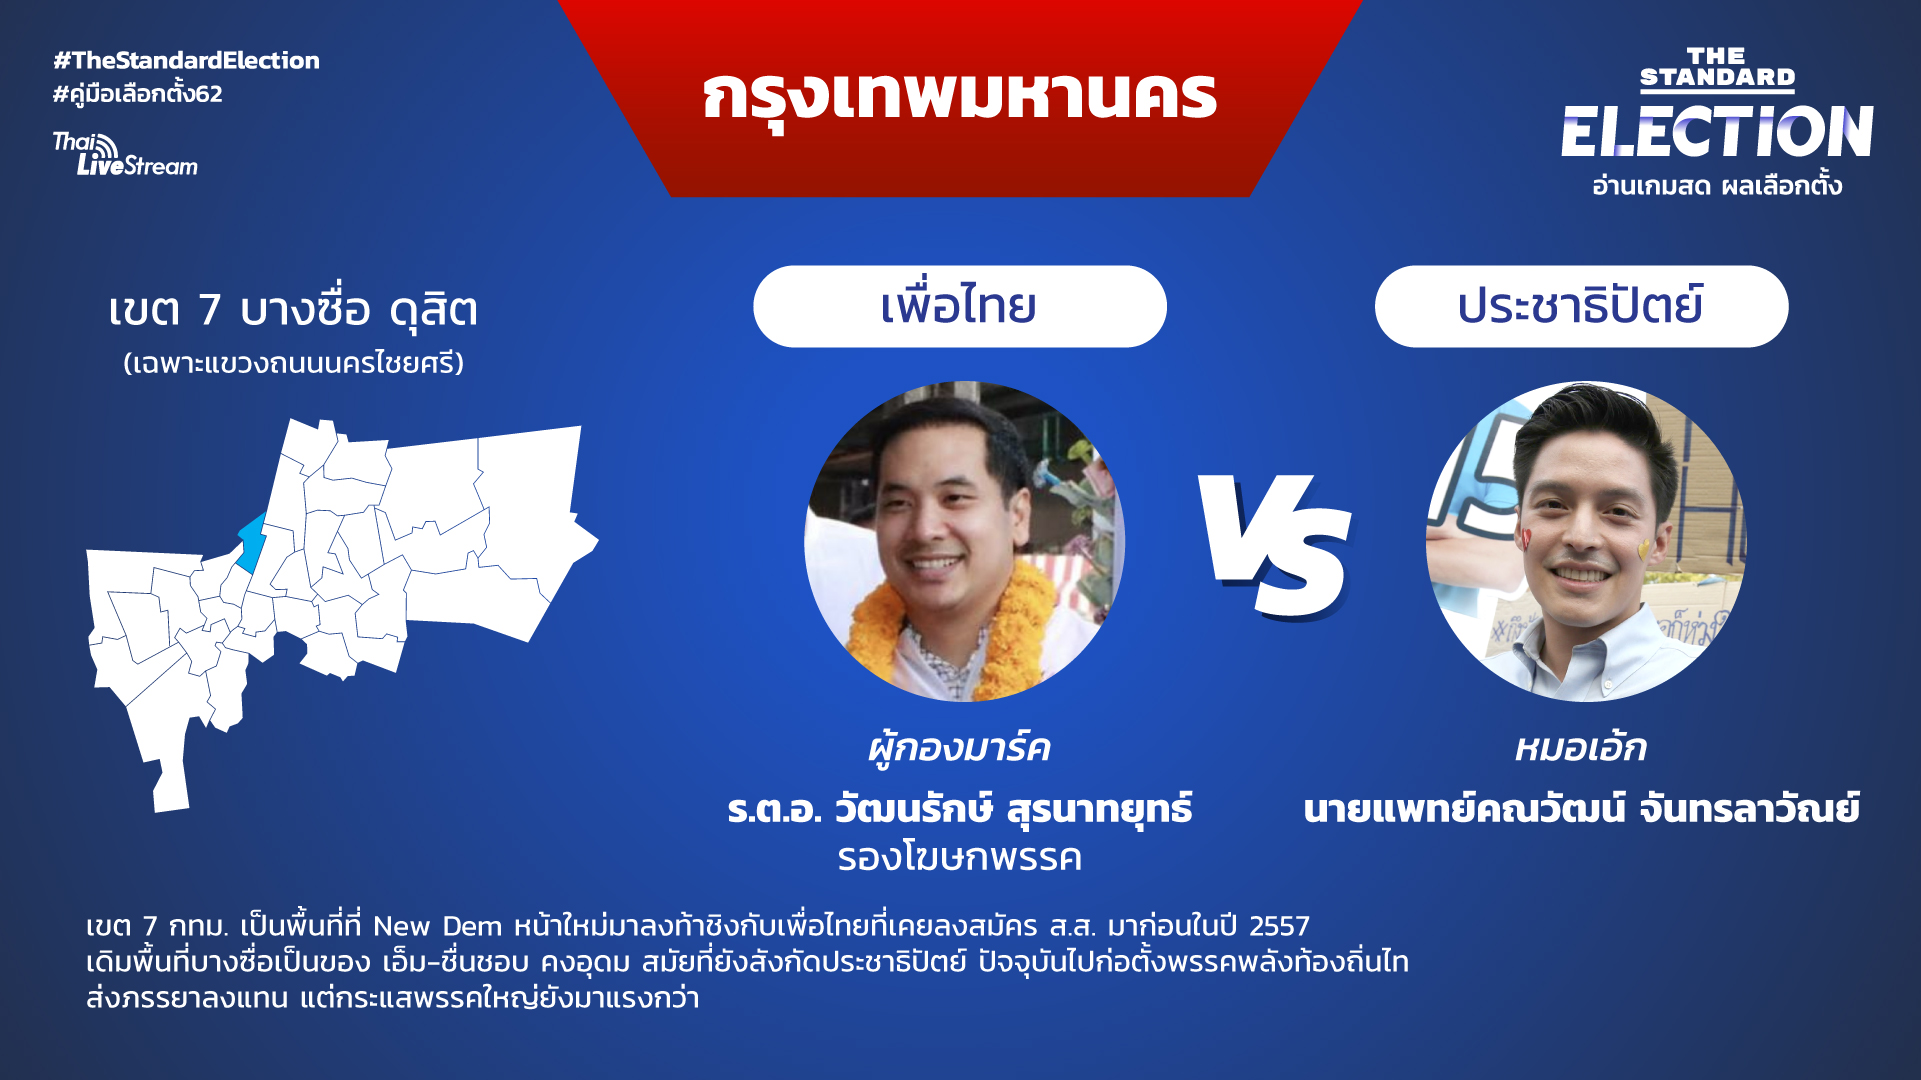 Thailand election 2019